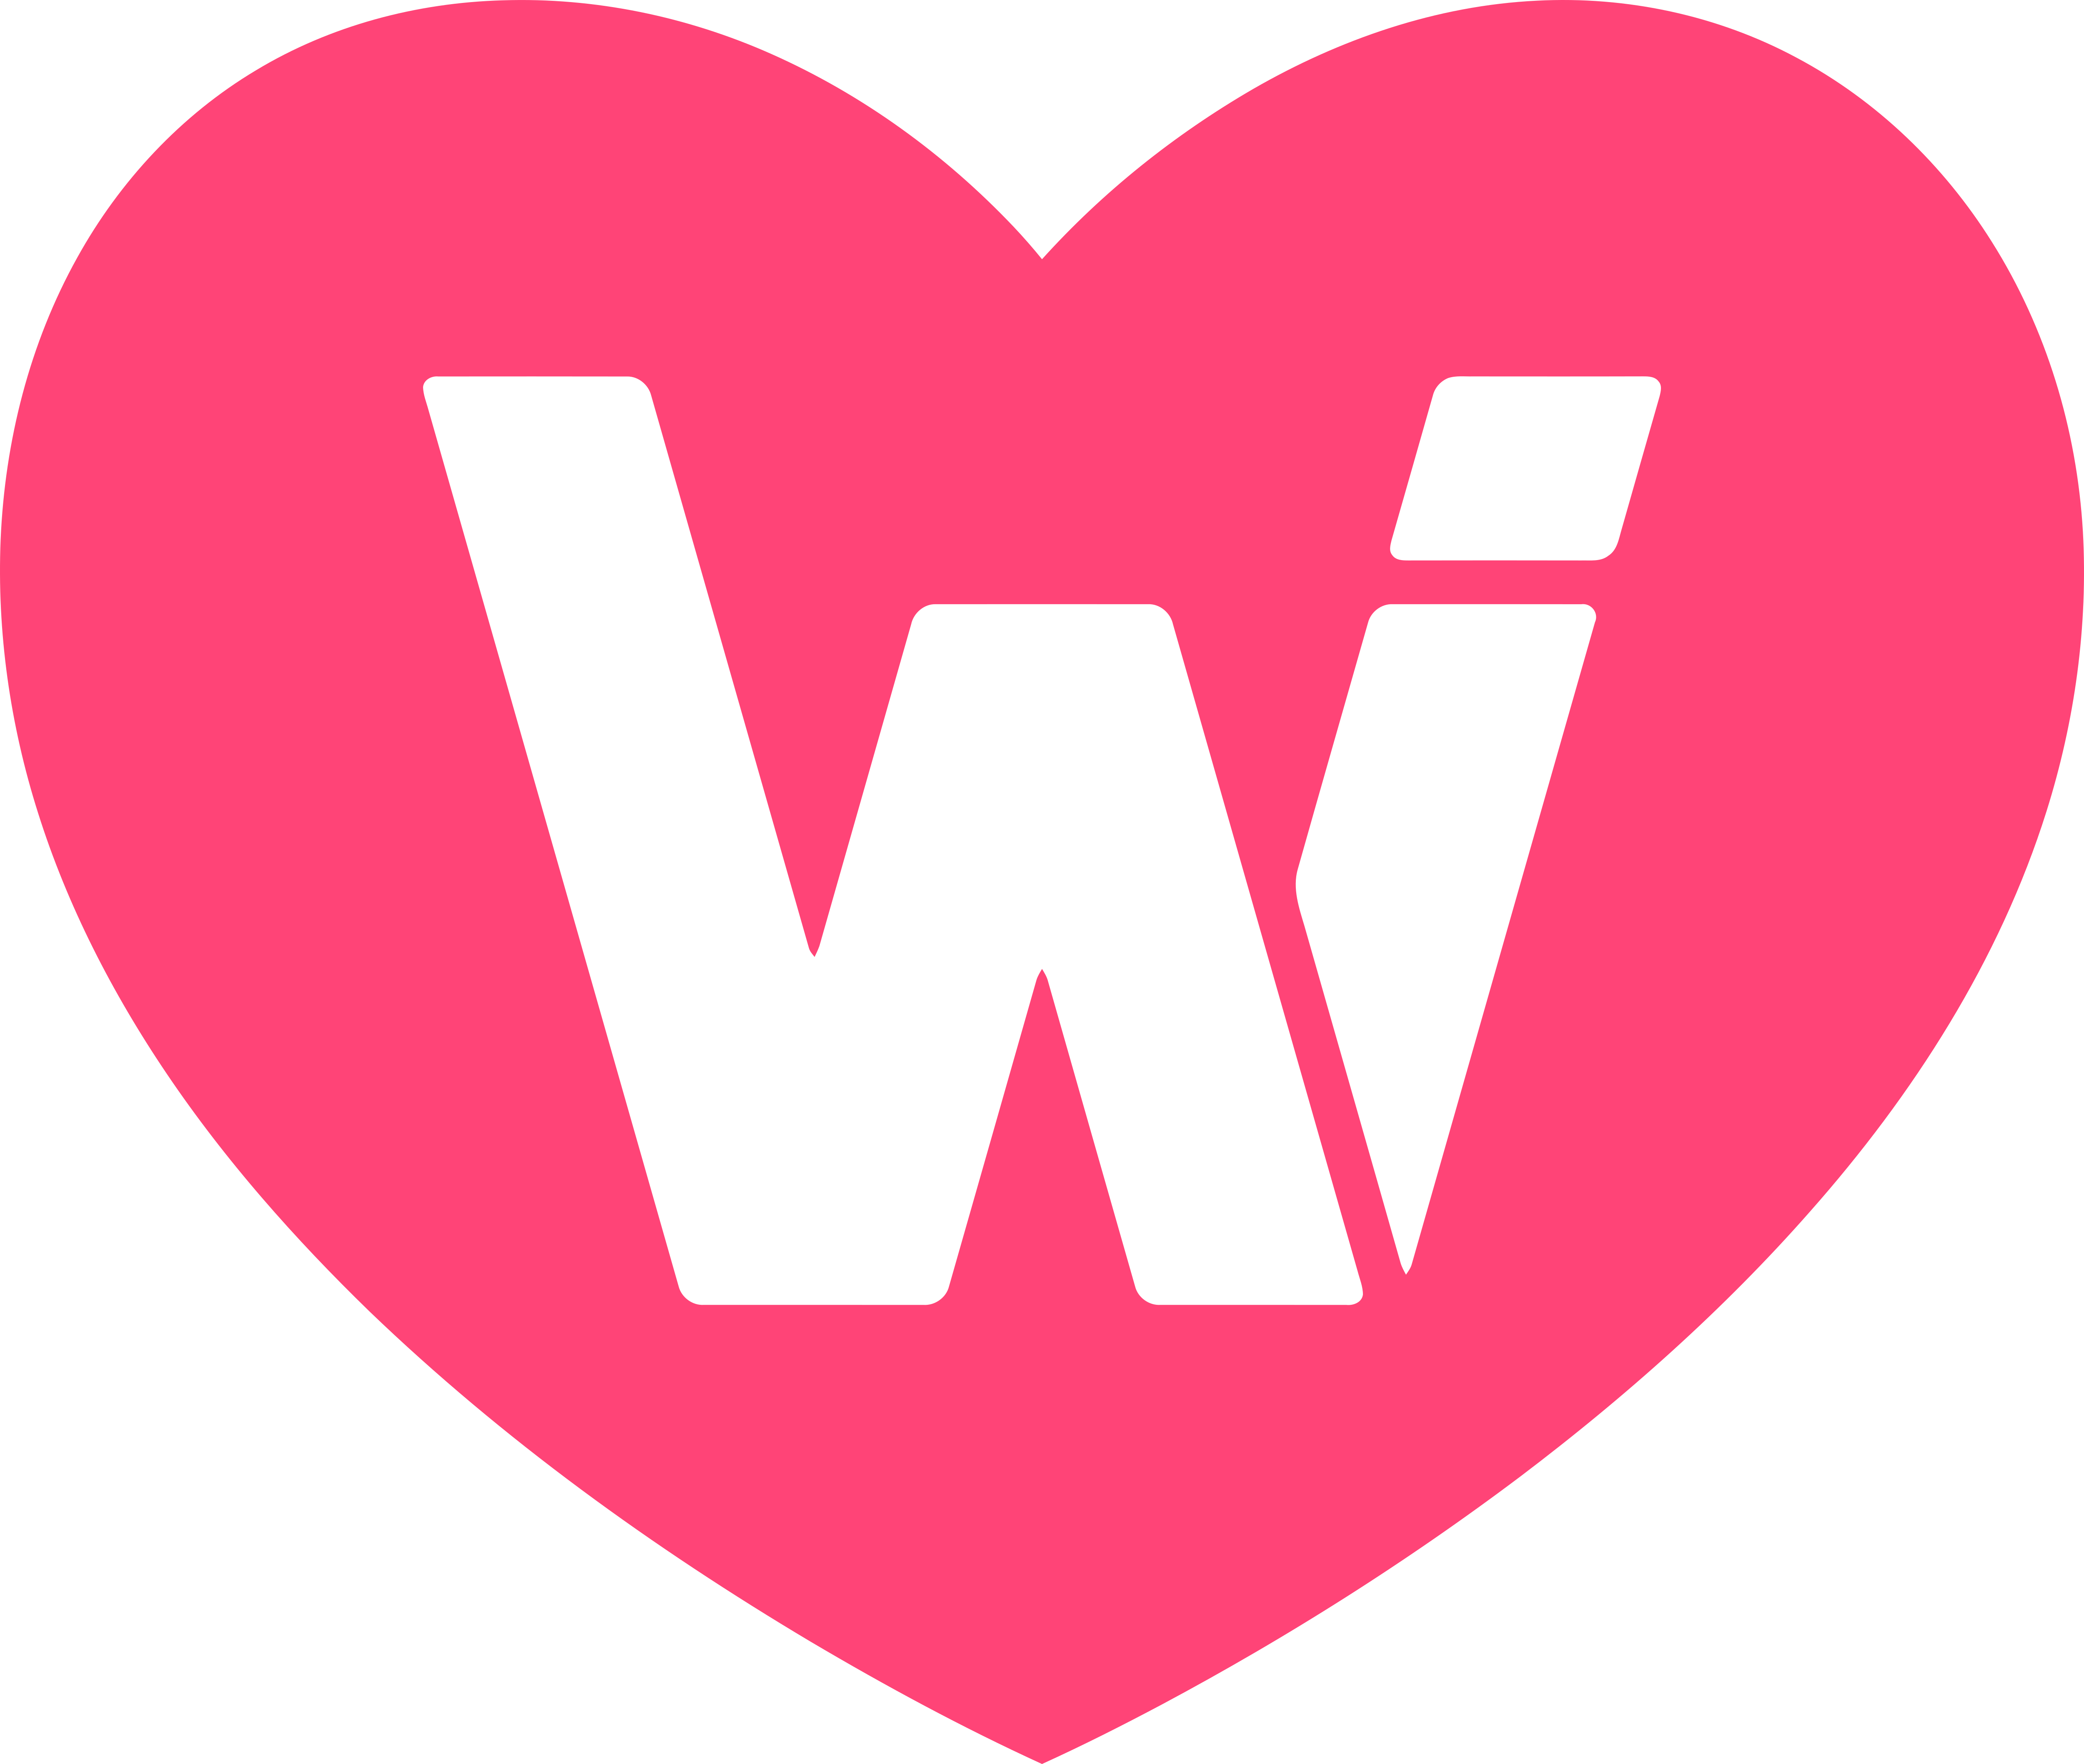 We Heart It Logos Download